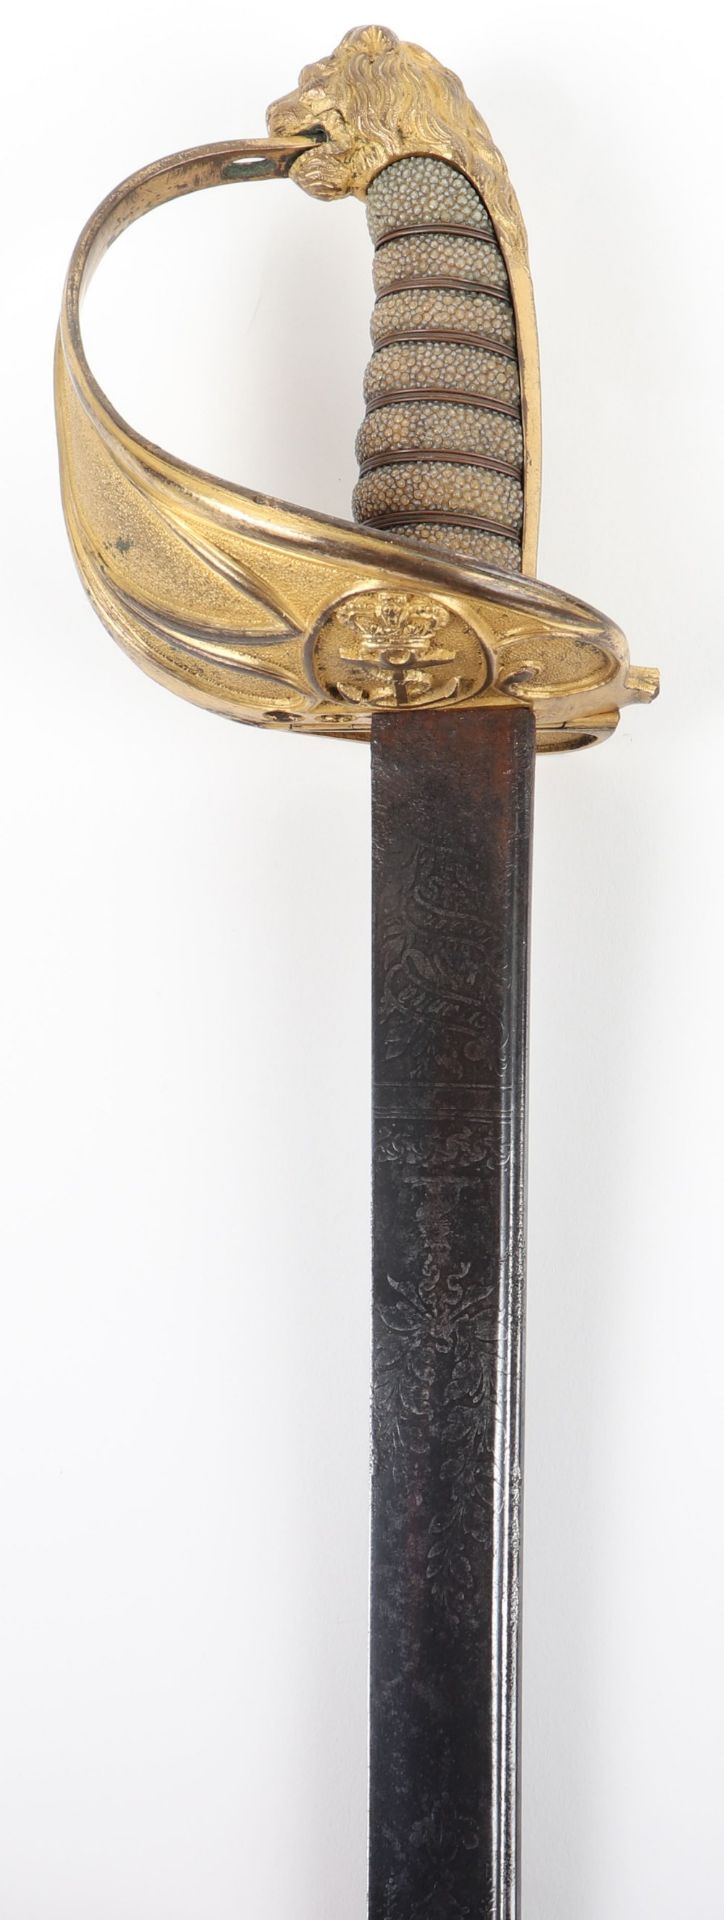 Historically Interesting Royal Navy Officer’s Presentation Sword c.1850